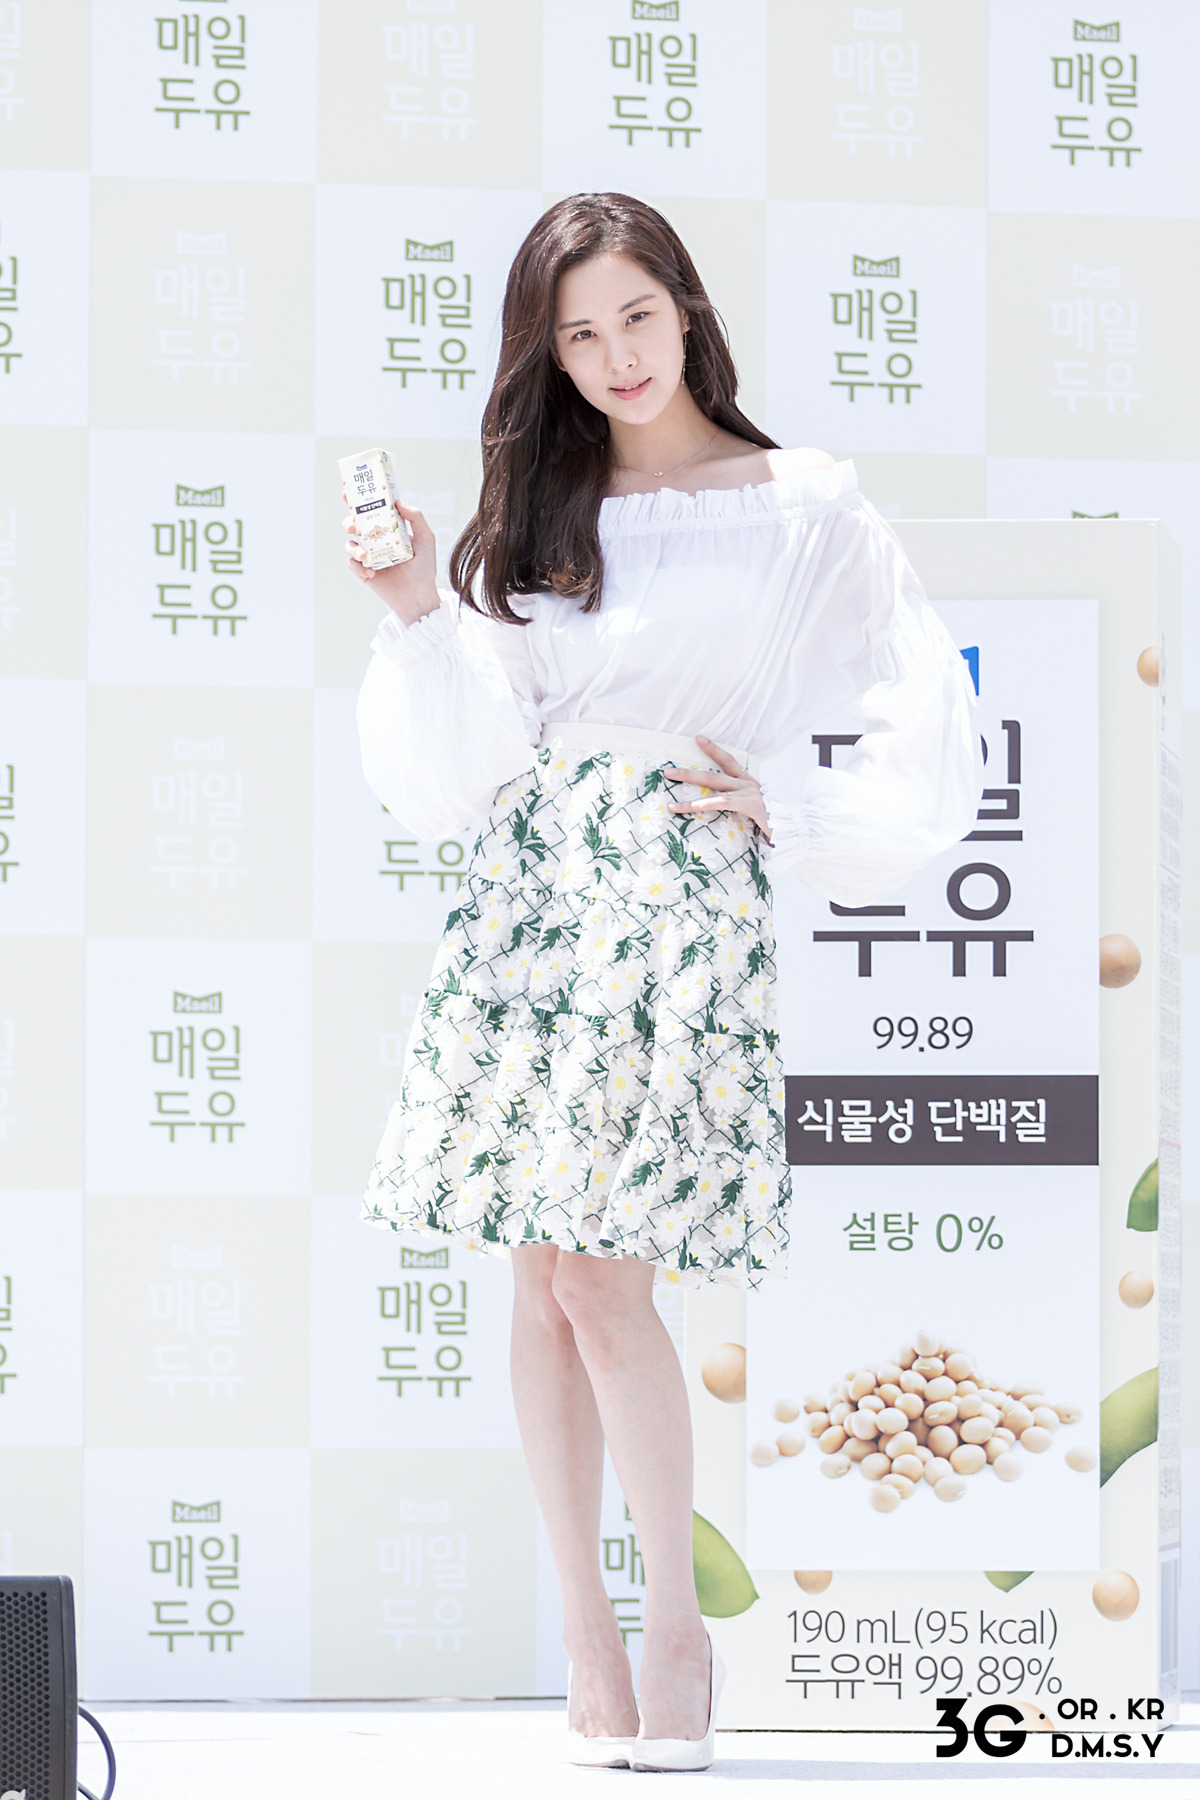  [PIC][03-06-2017]SeoHyun tham dự sự kiện “City Forestival - Maeil Duyou 'Confidence Diary'” vào chiều nay - Page 3 2219B13F593E8F00347D46